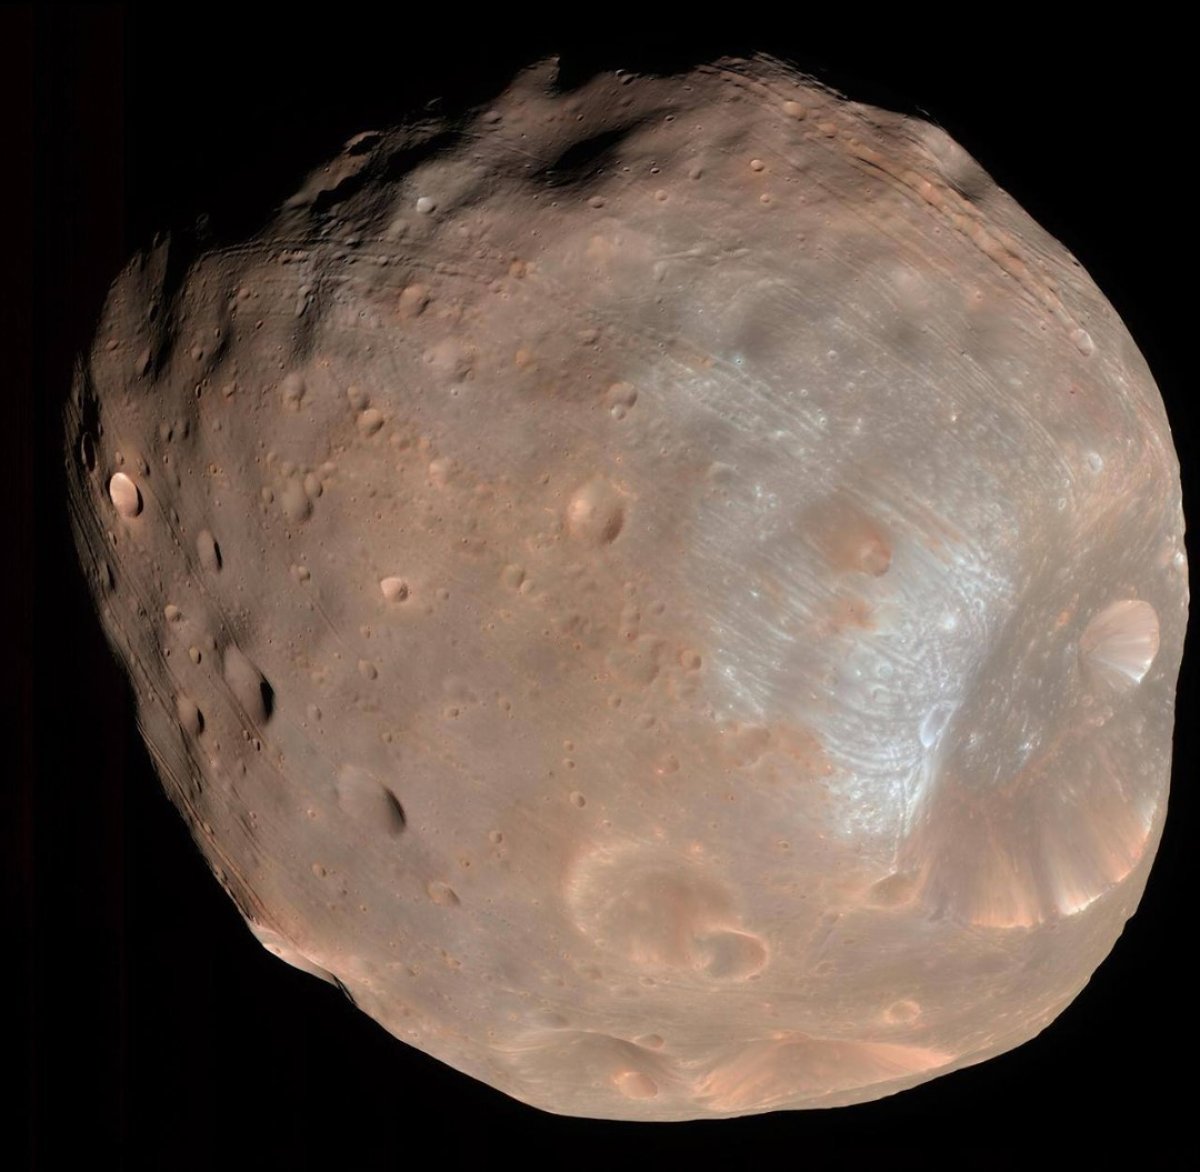 NASA shared Mars' natural satellite Phobos #1